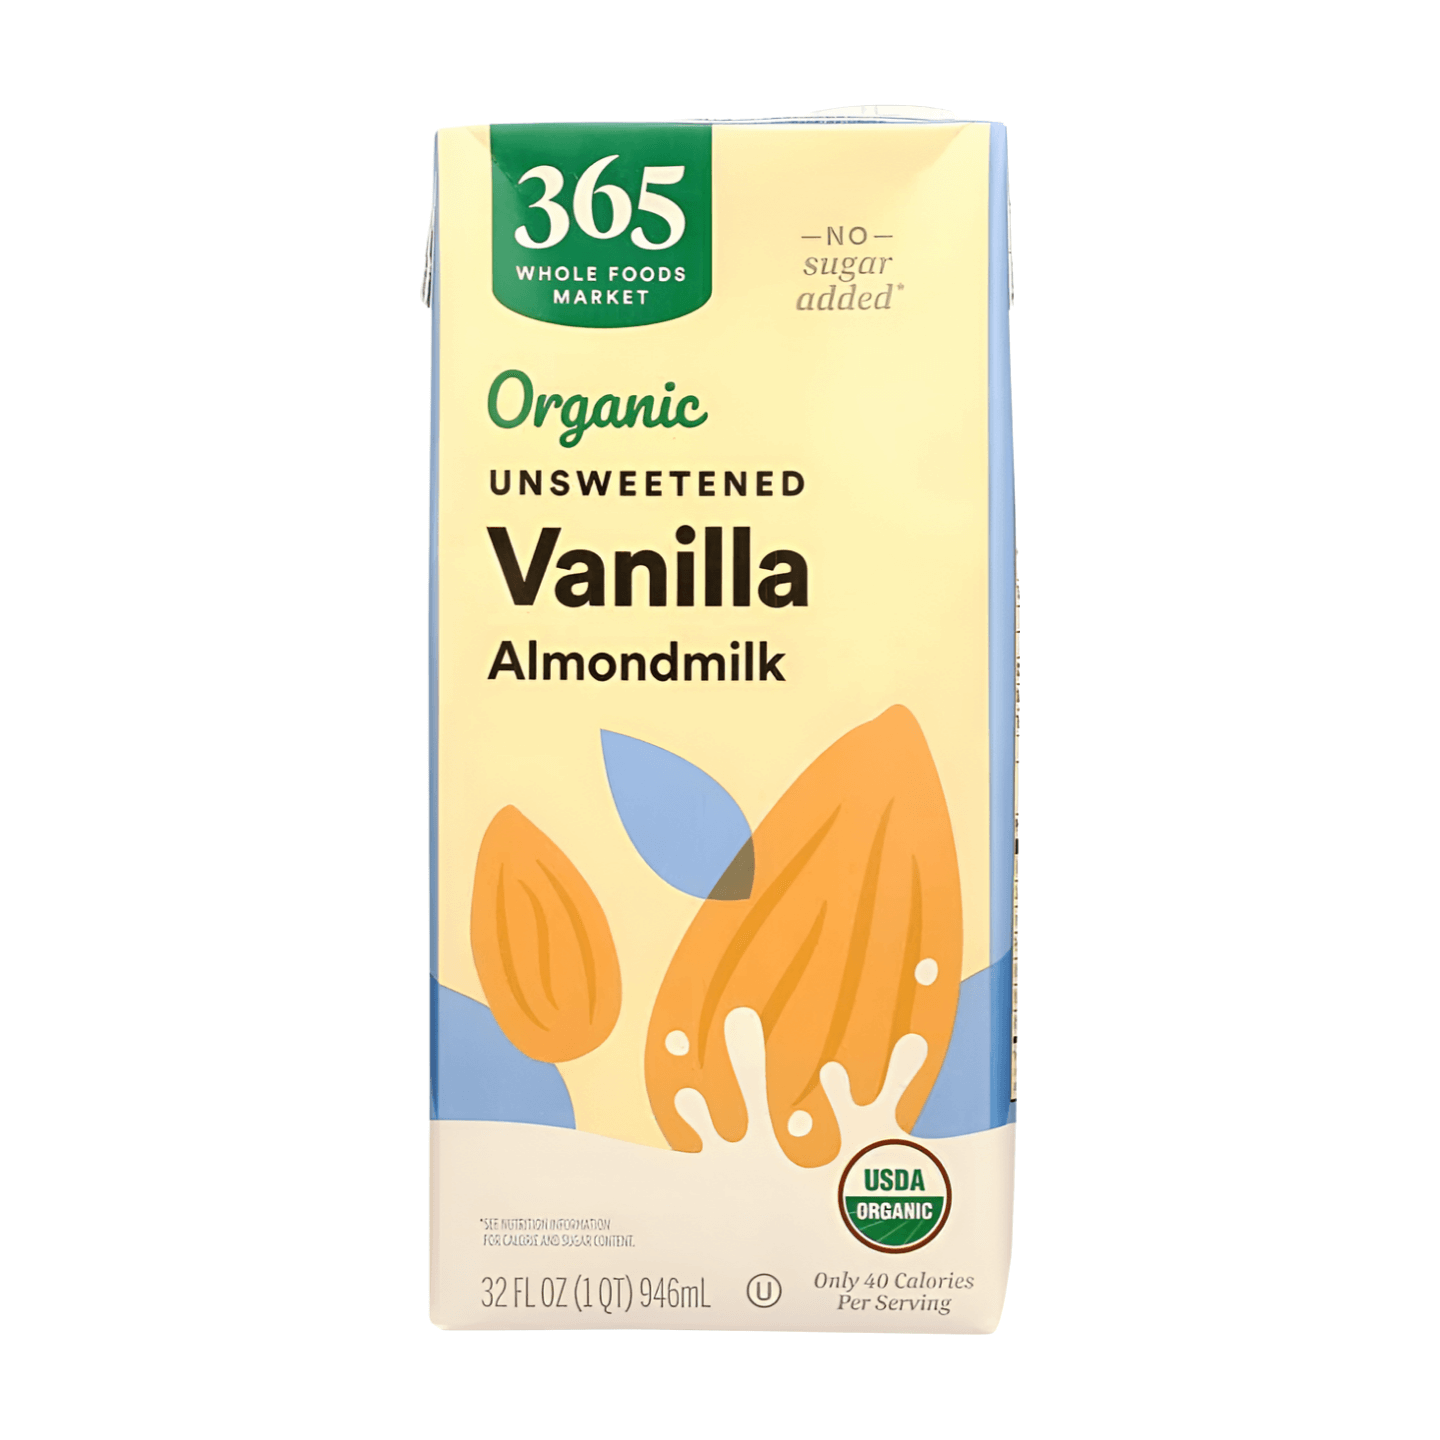 Wholefoods 365 Organic Unsweetened Vanilla Almond Milk Shelf-Stable